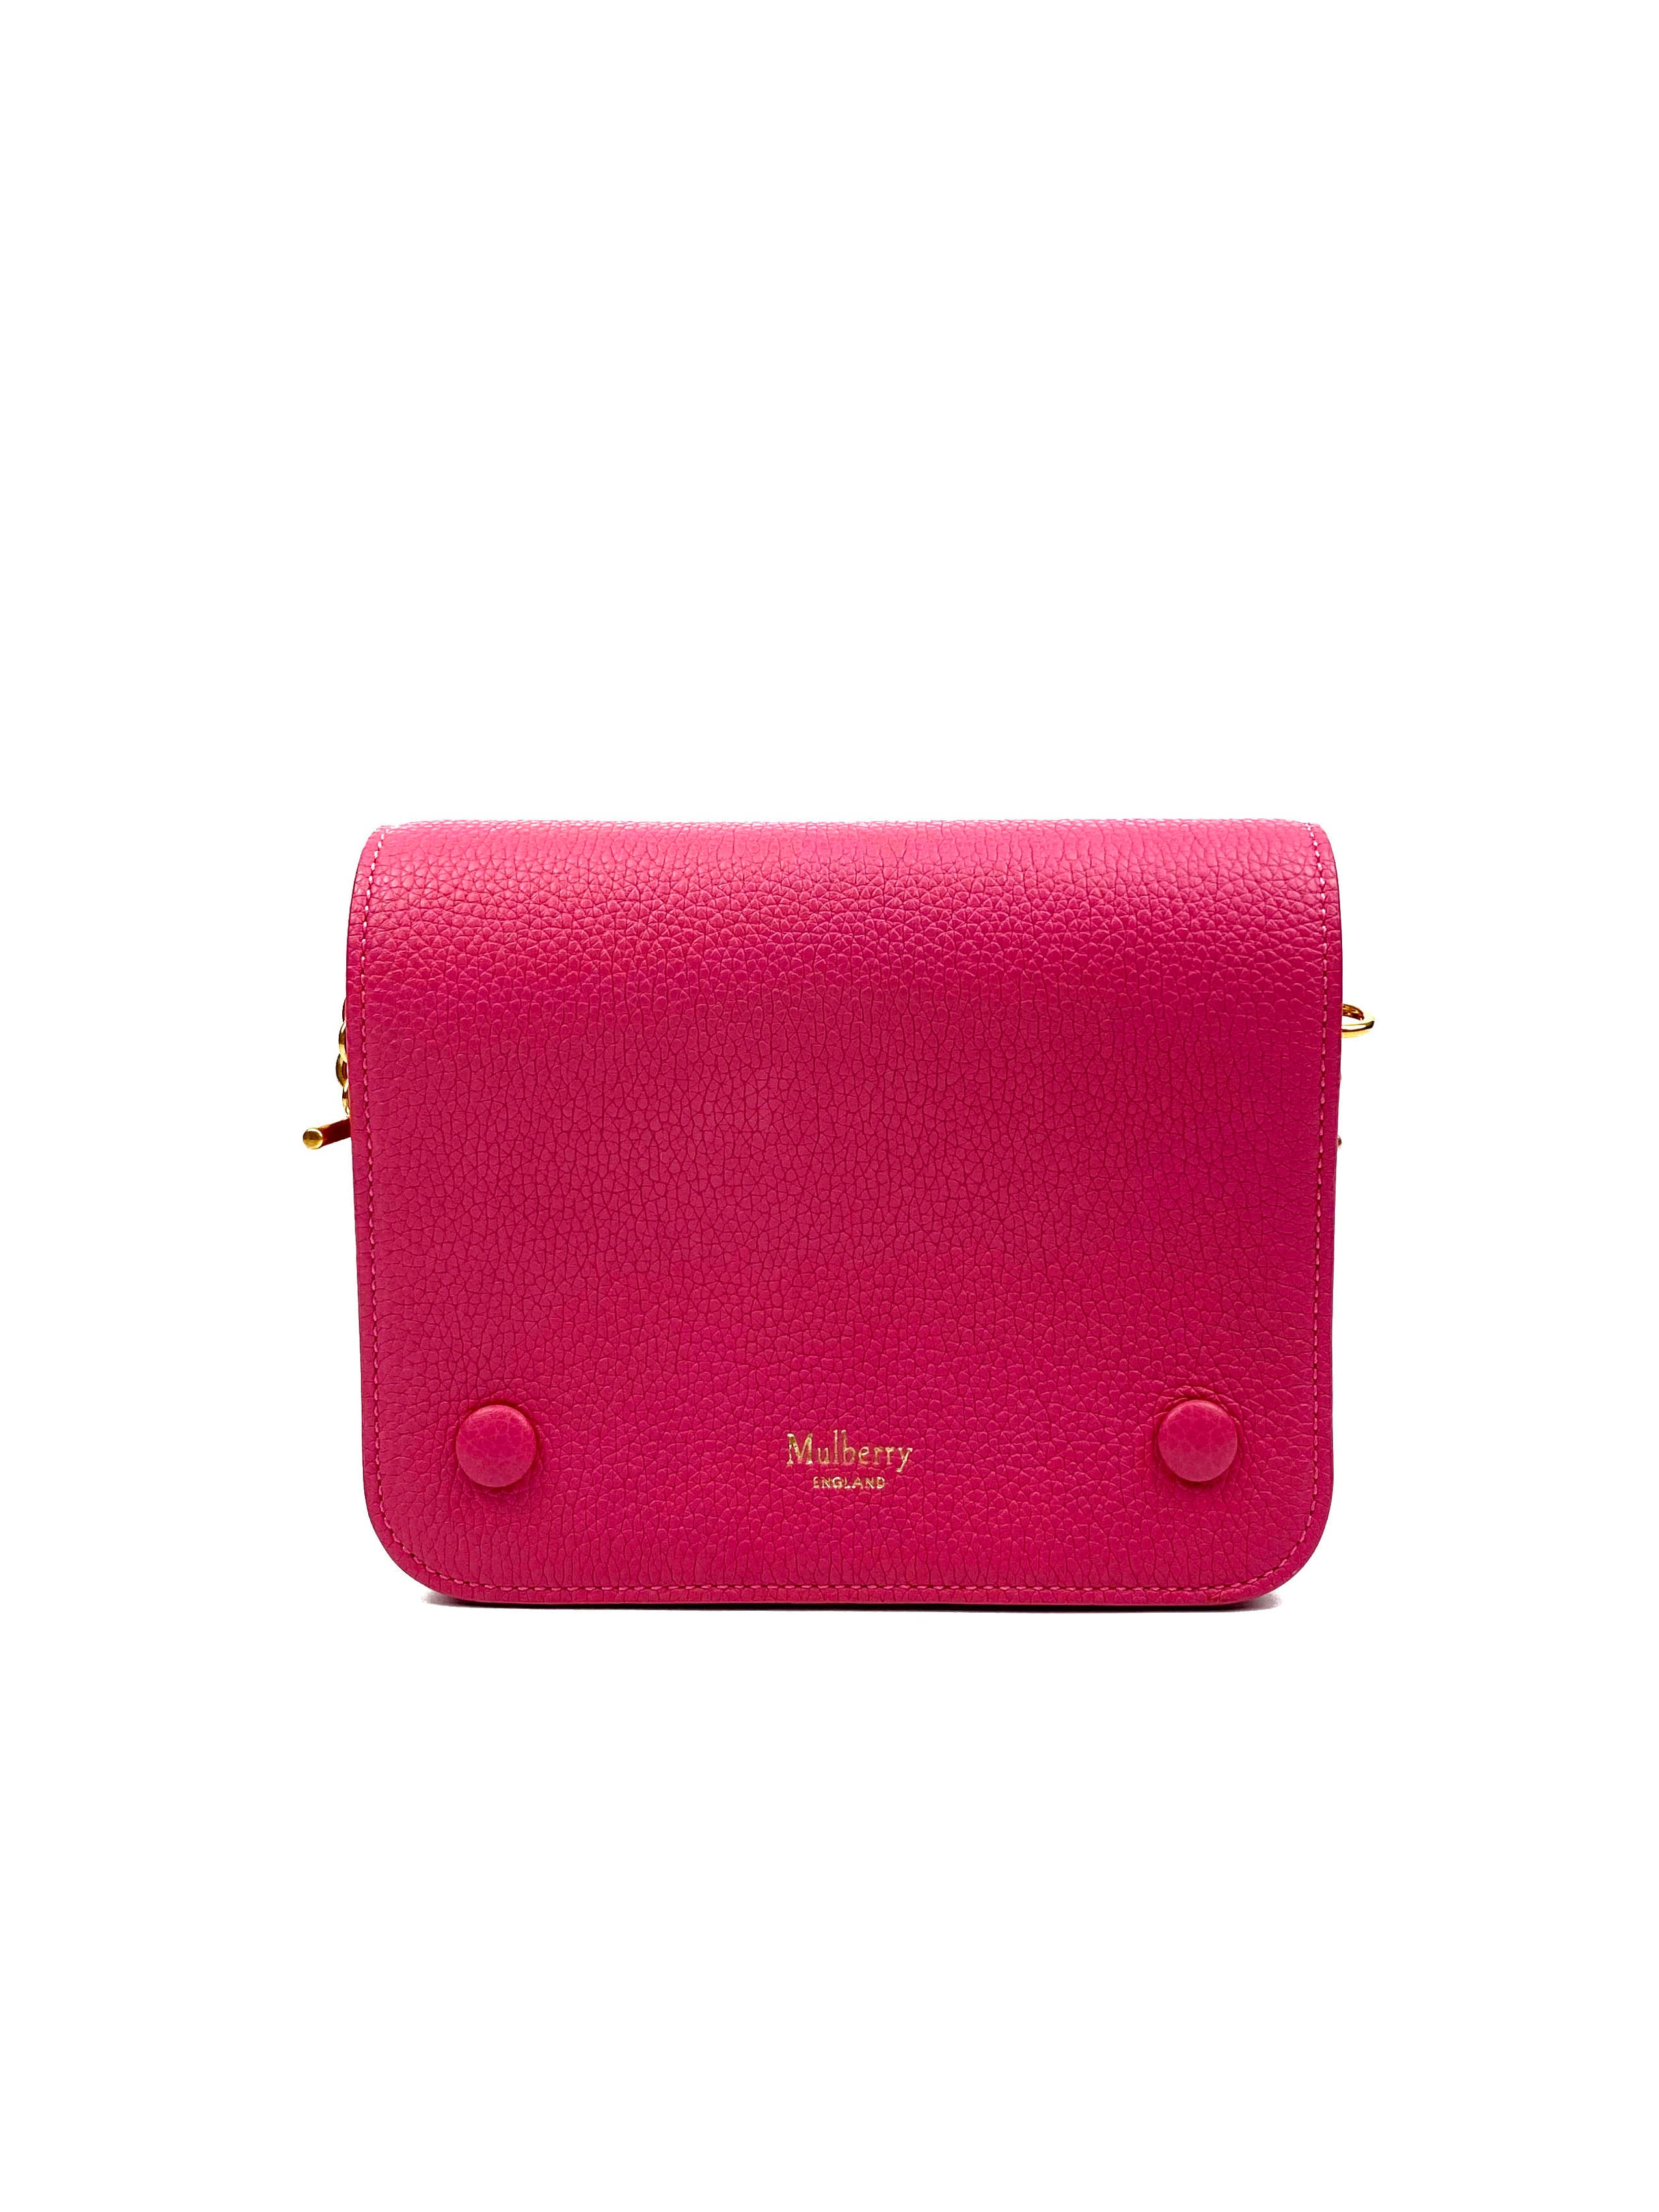 mulberry-pink-bag-6.jpg